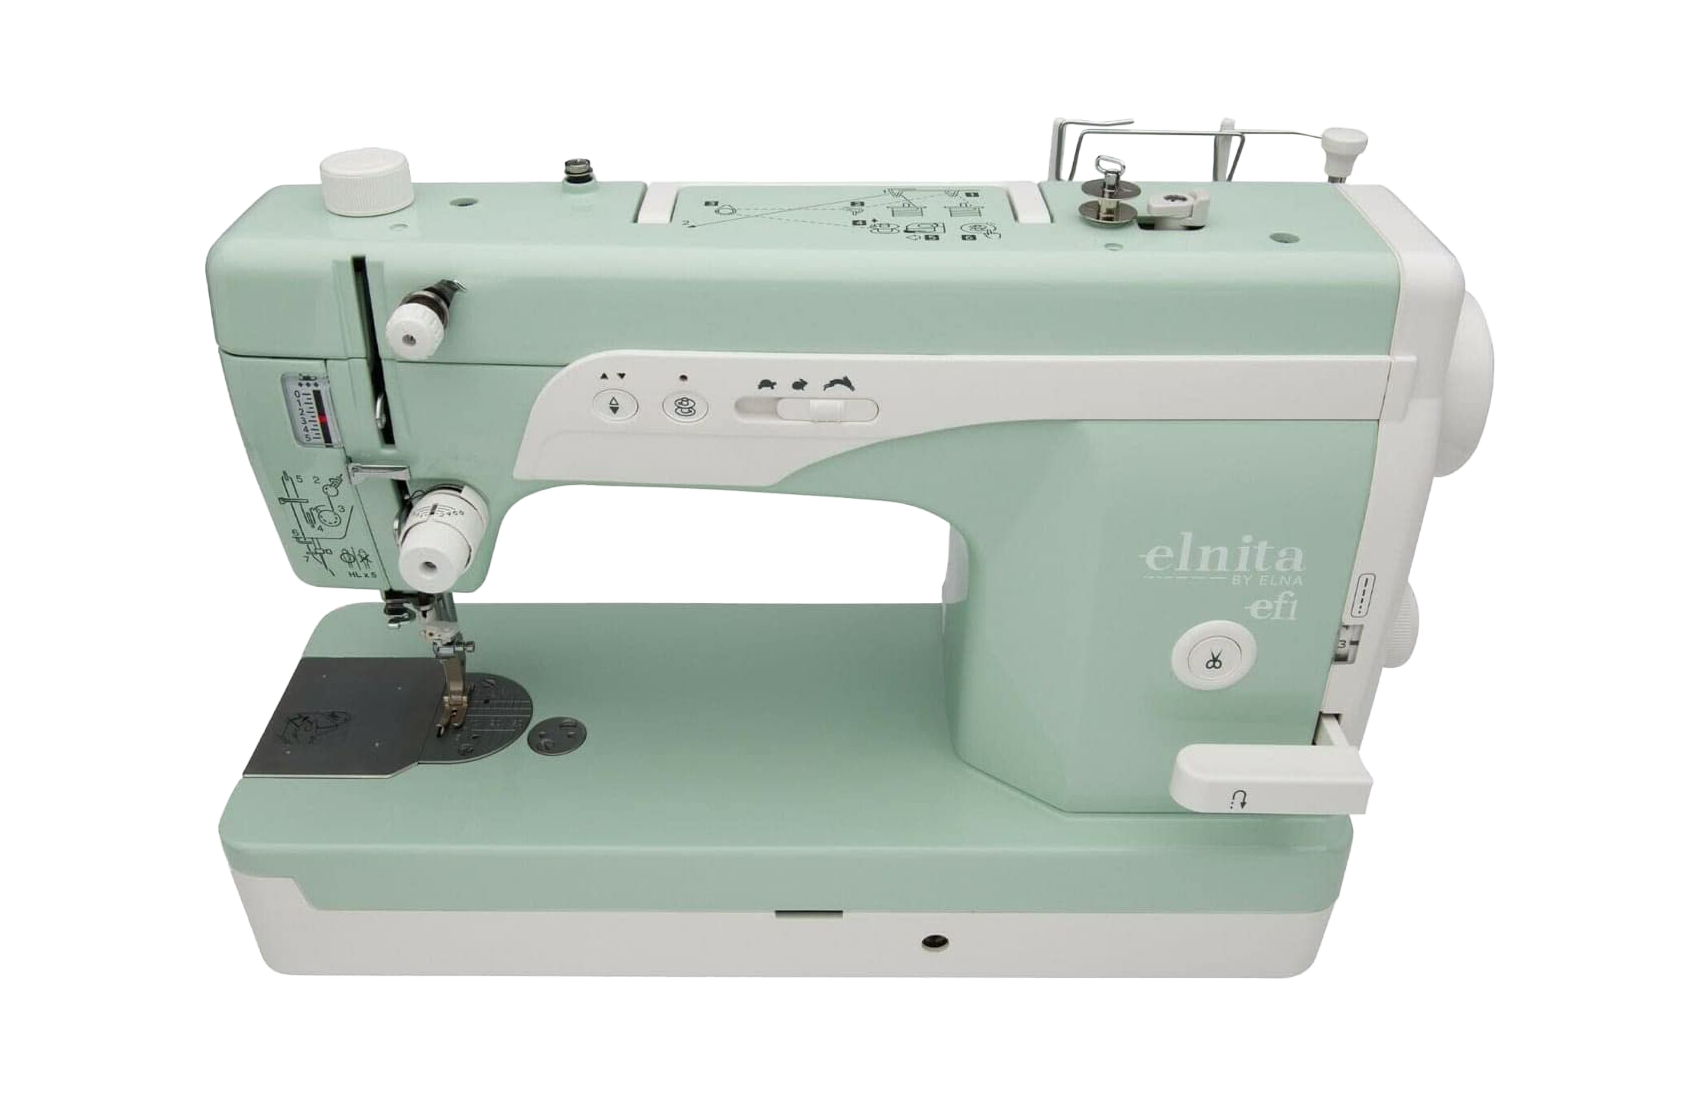 Elna Elnita EF1 Sewing and Quilting Machine